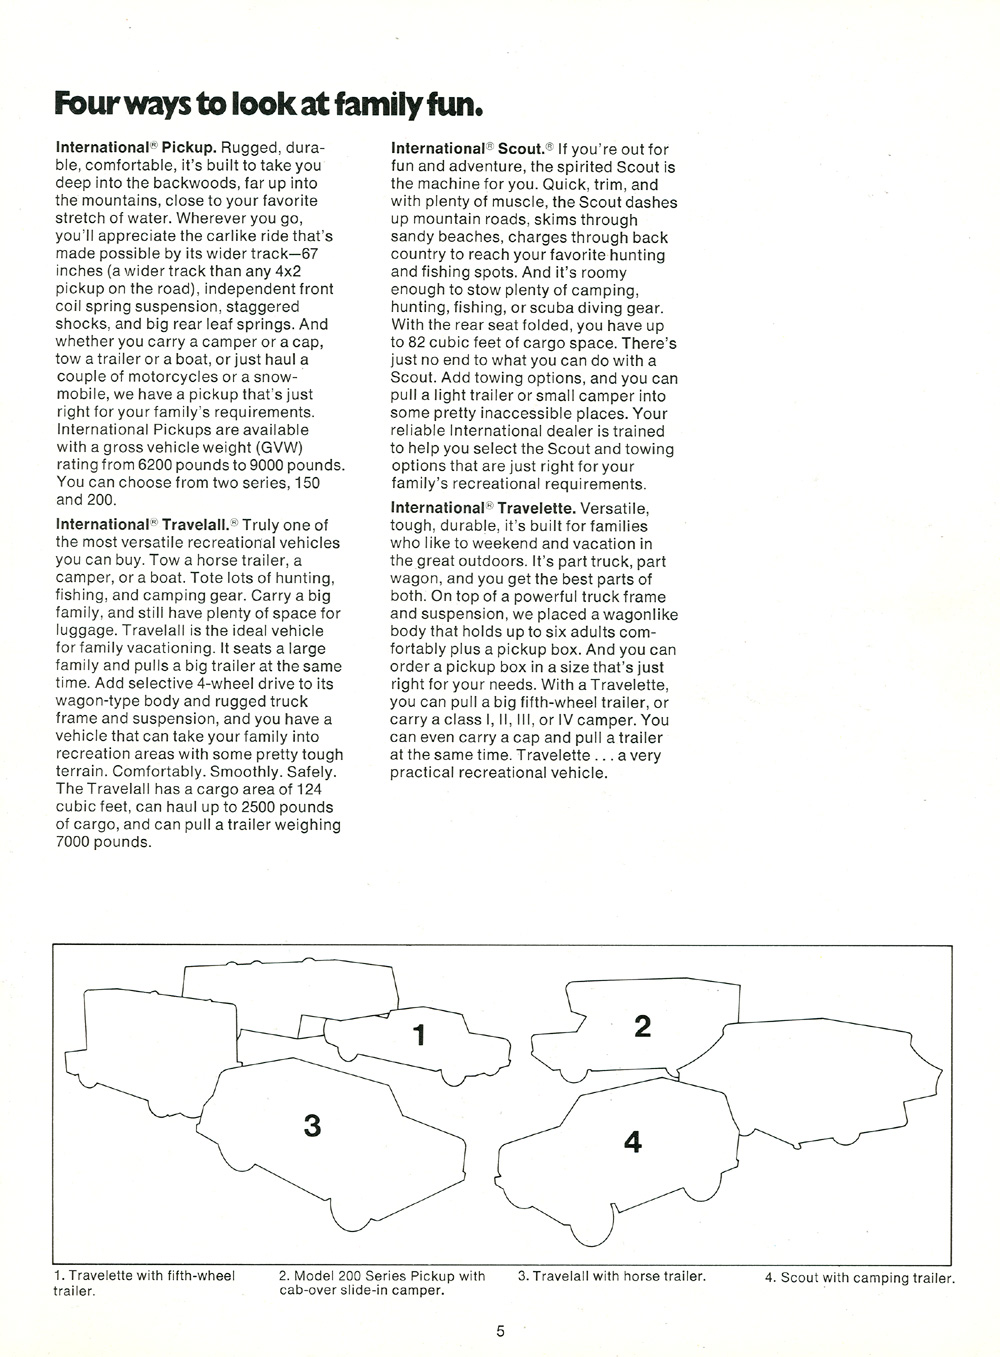 1975 International Recreational Vehicles Brochure Page 24